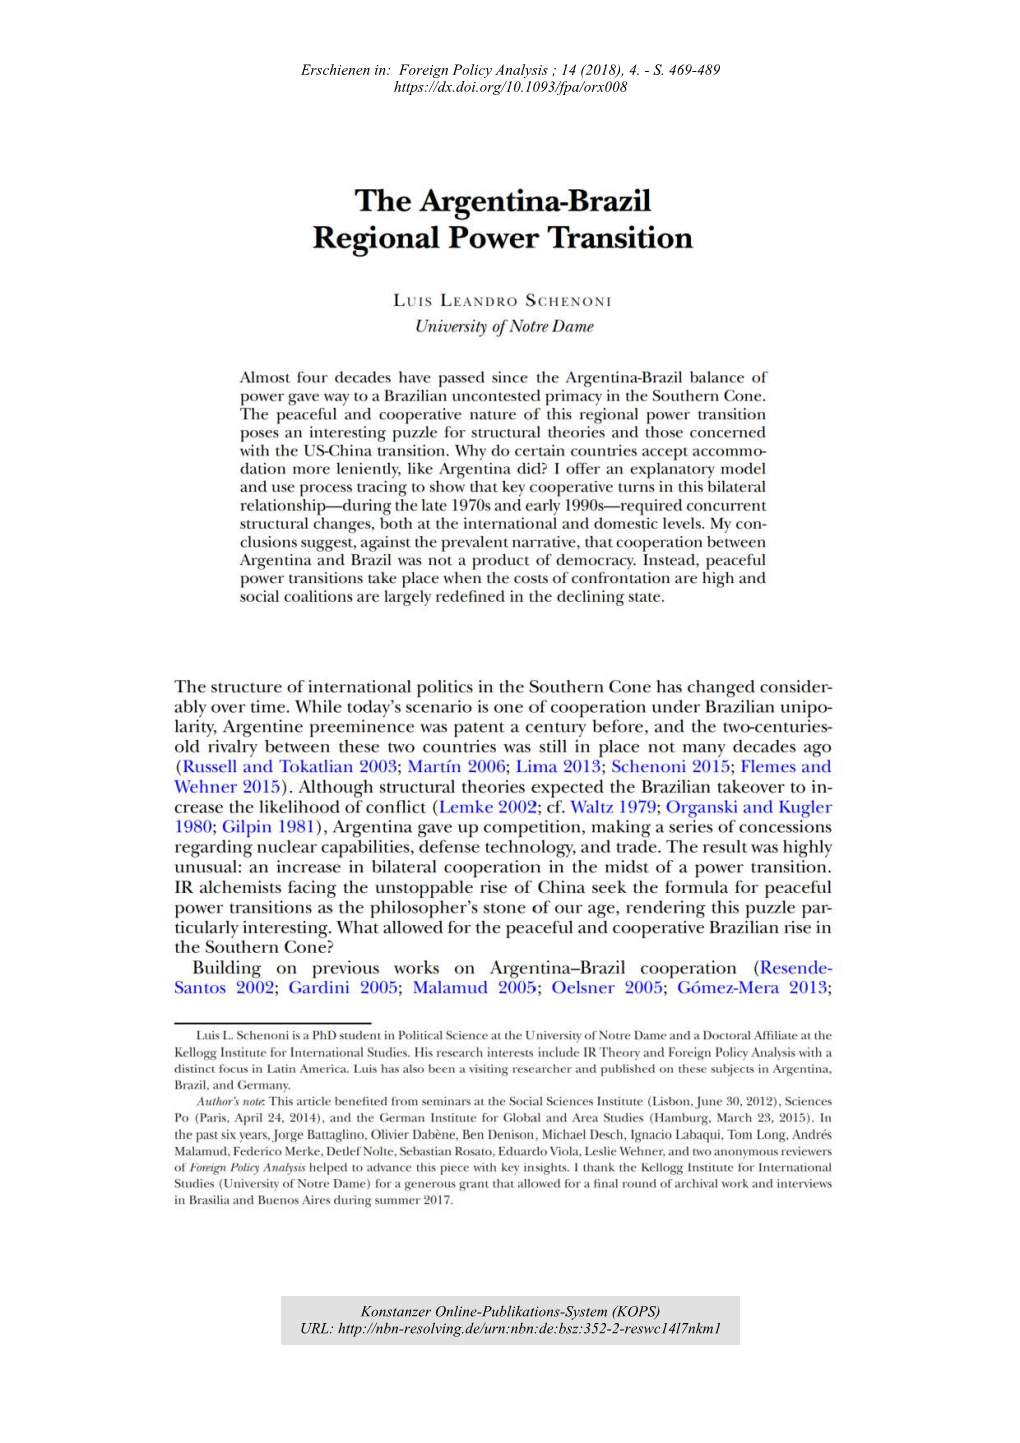 The Argentina-Brazil Regional Power Transition